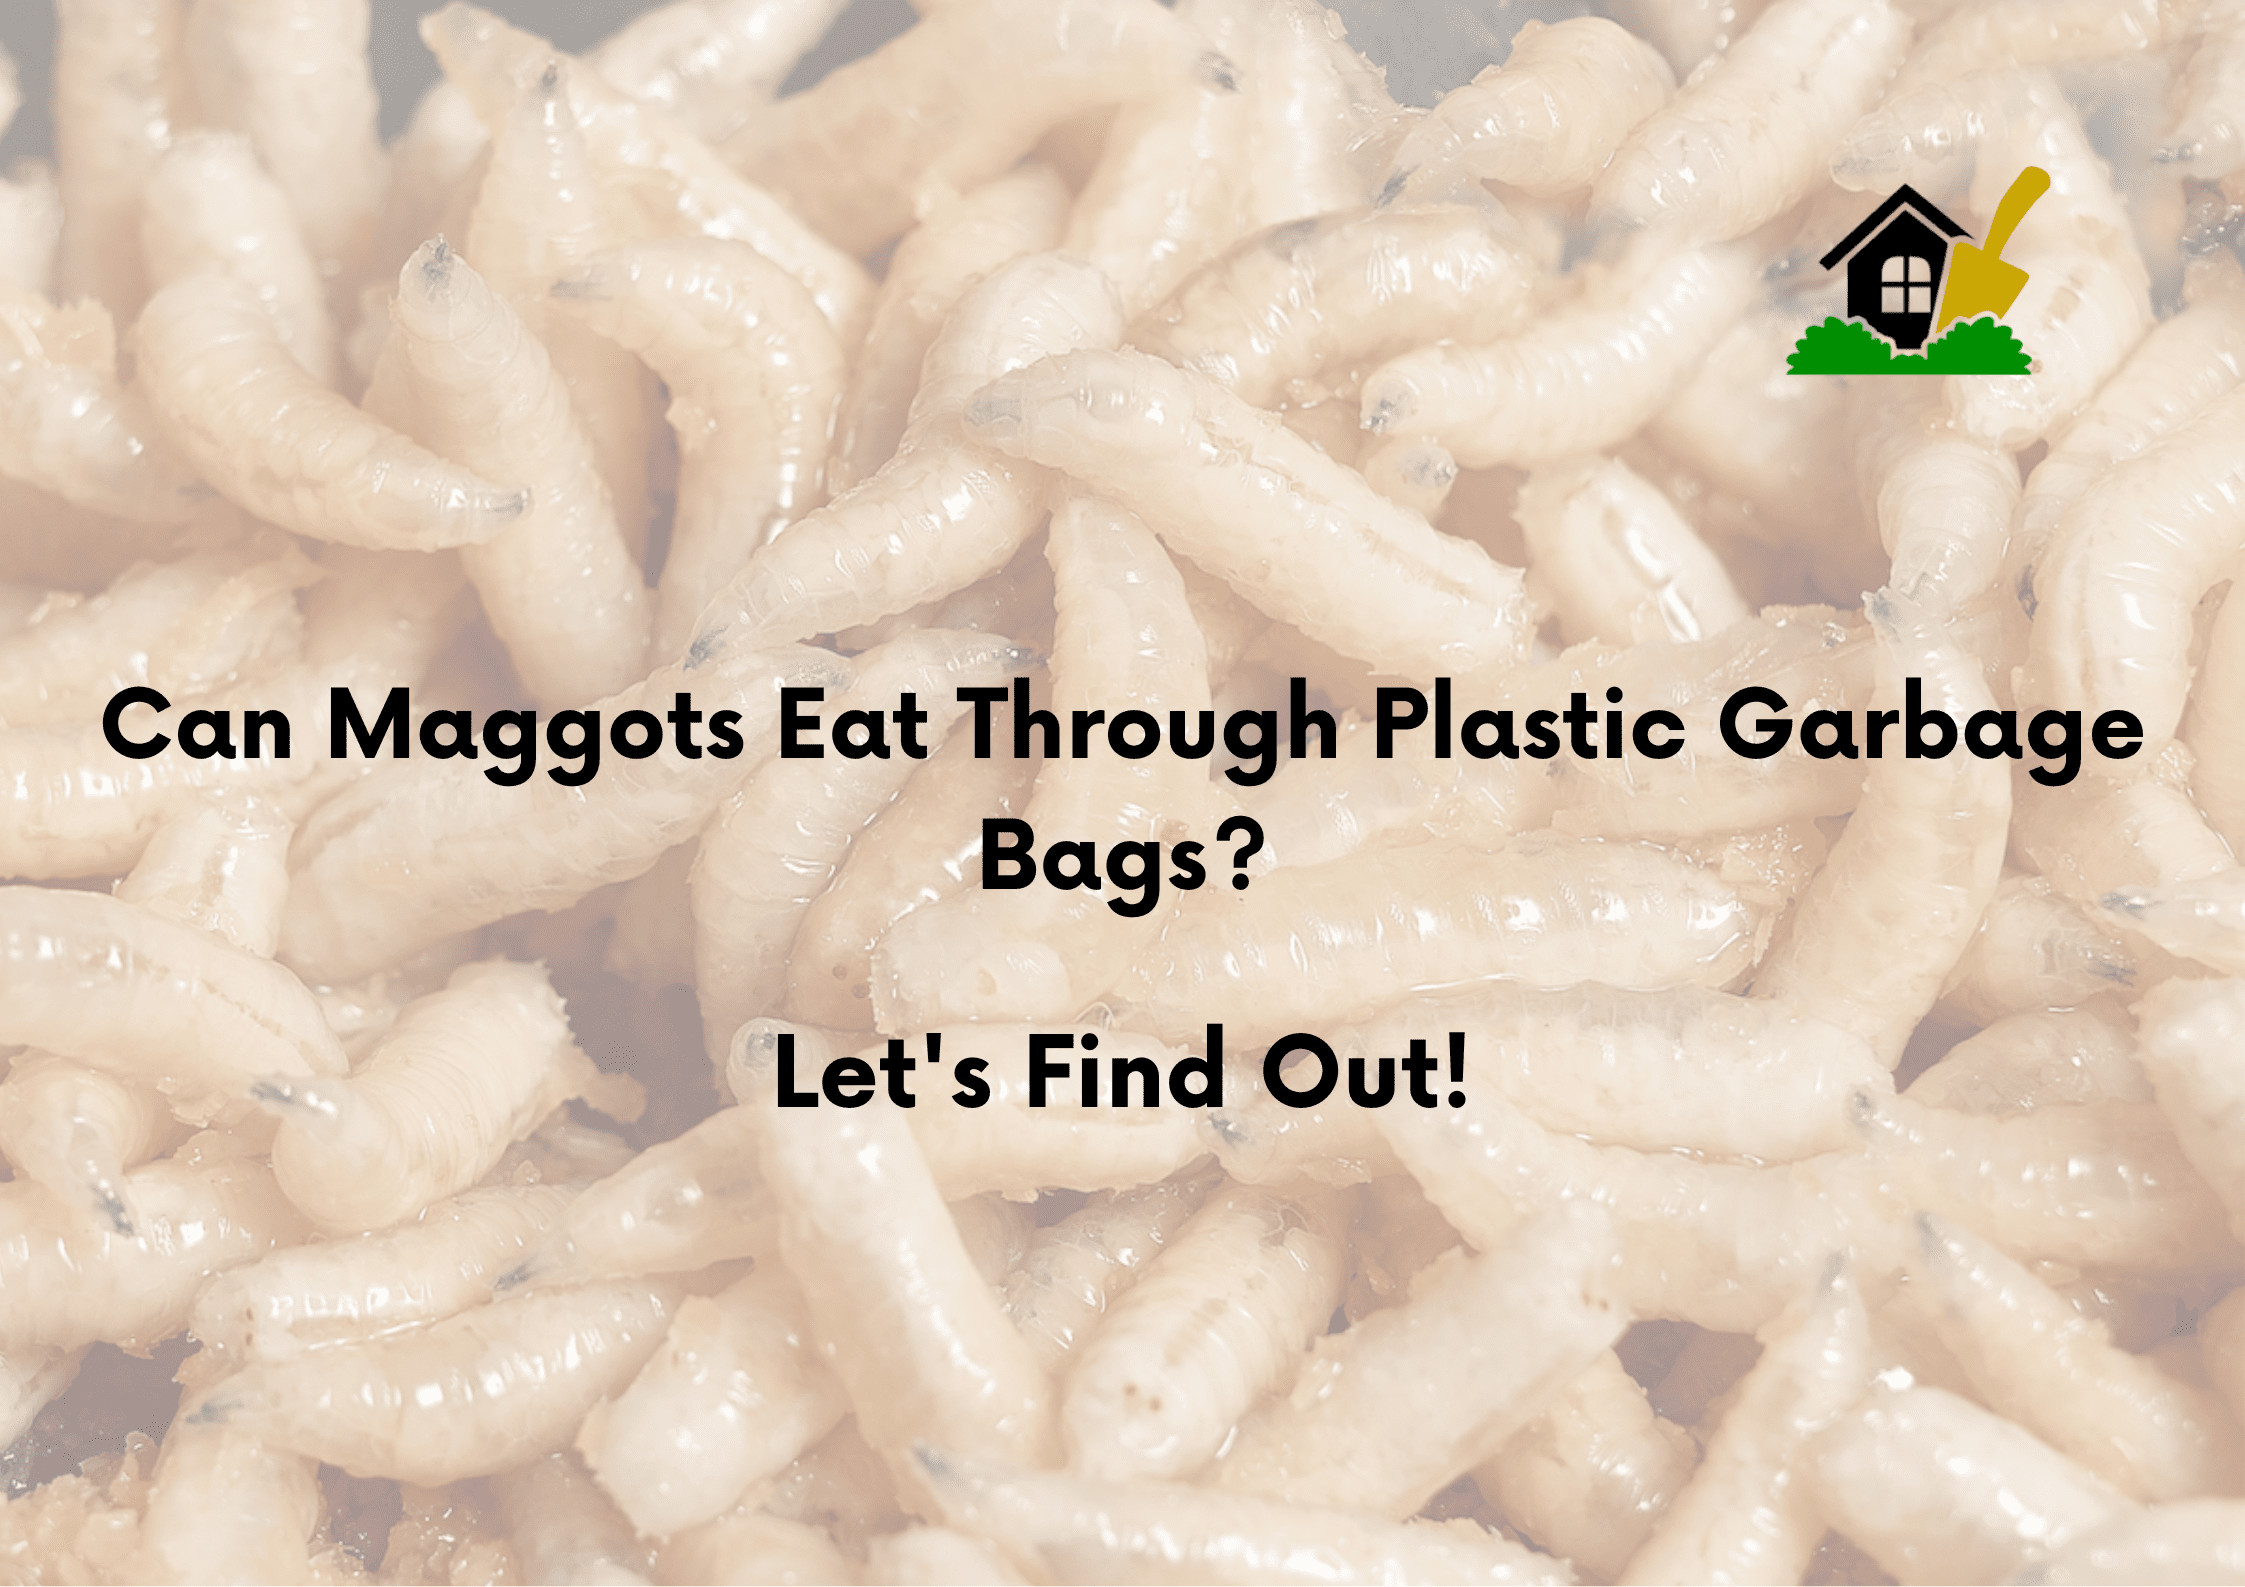 Can Maggots Eat Through Plastic Garbage Bags